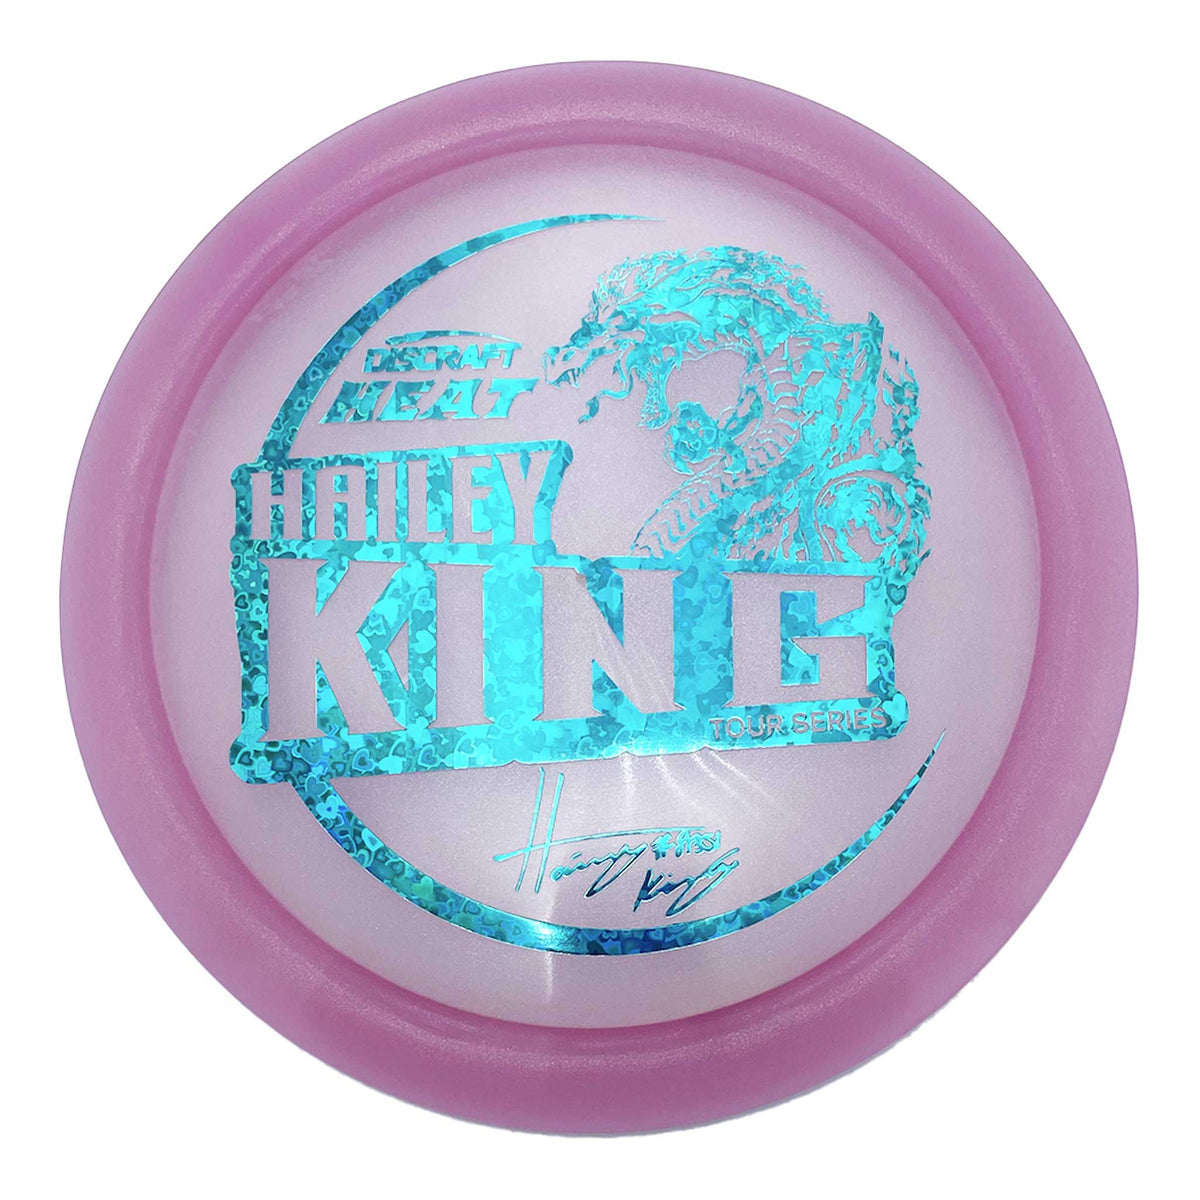 Discraft Hailey King 2021 Tour Series Heat distance driver - Pink